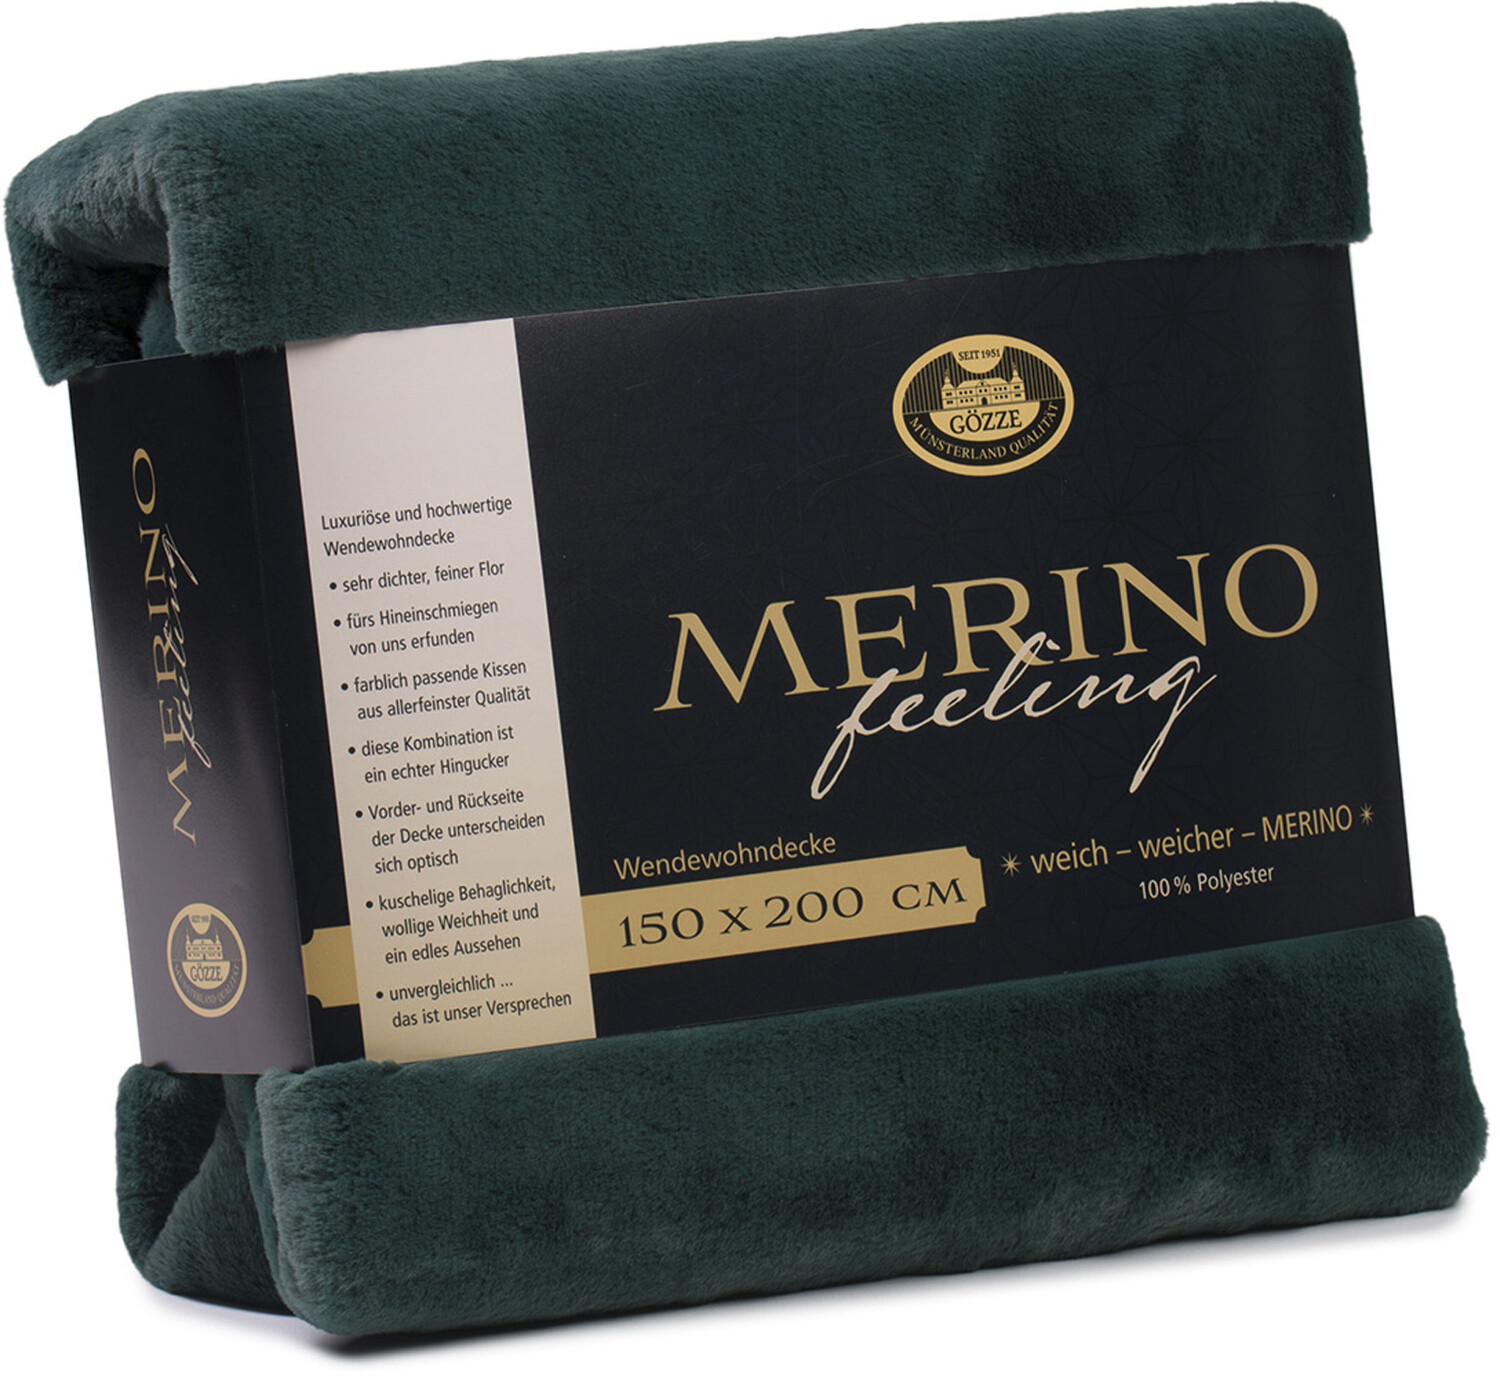 Merino | Preisvergleich 49,95 Gözze 150x200cm € ab bei